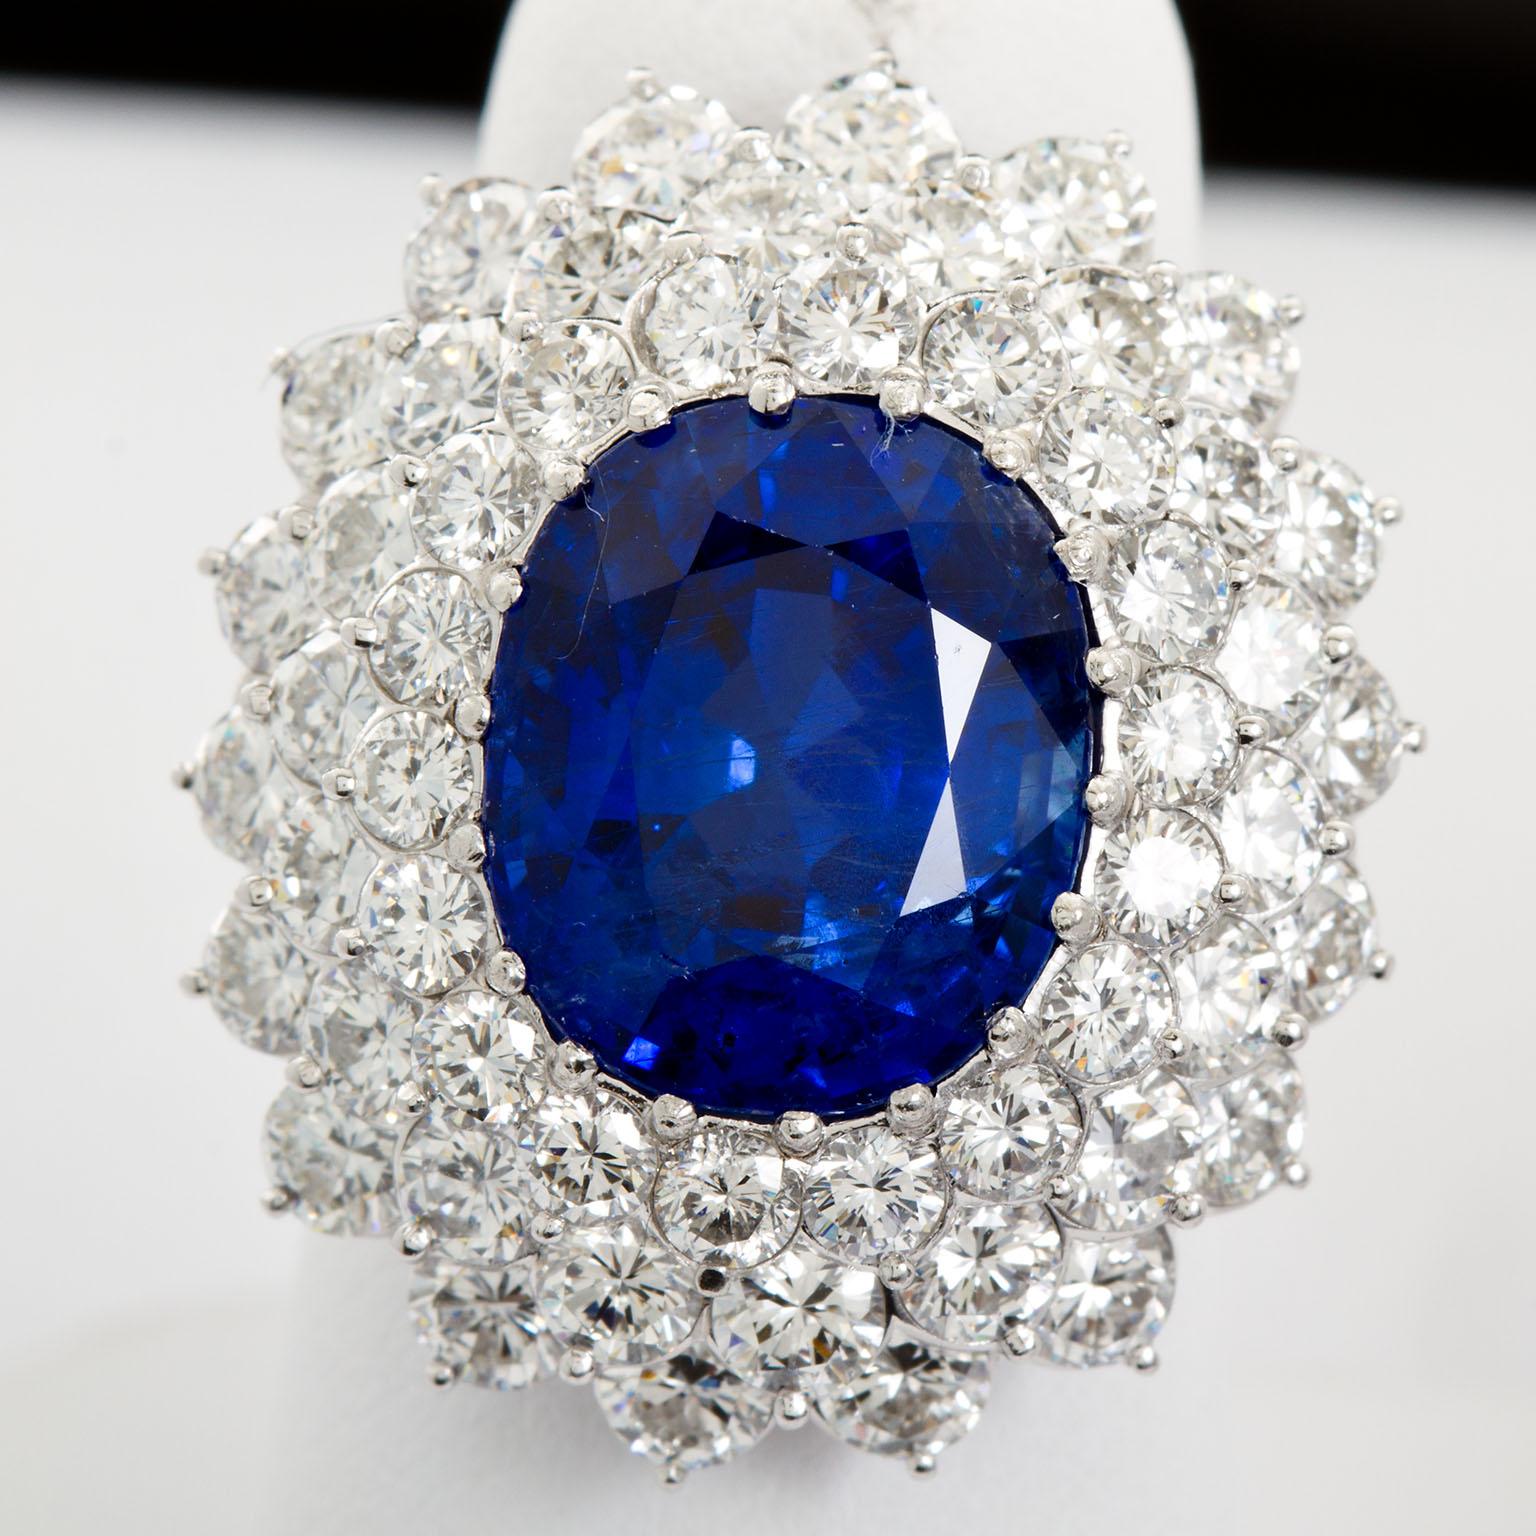 Oval Cut 12.10 Carat Burma Unheated Oval Sapphire Diamond Cluster Ring